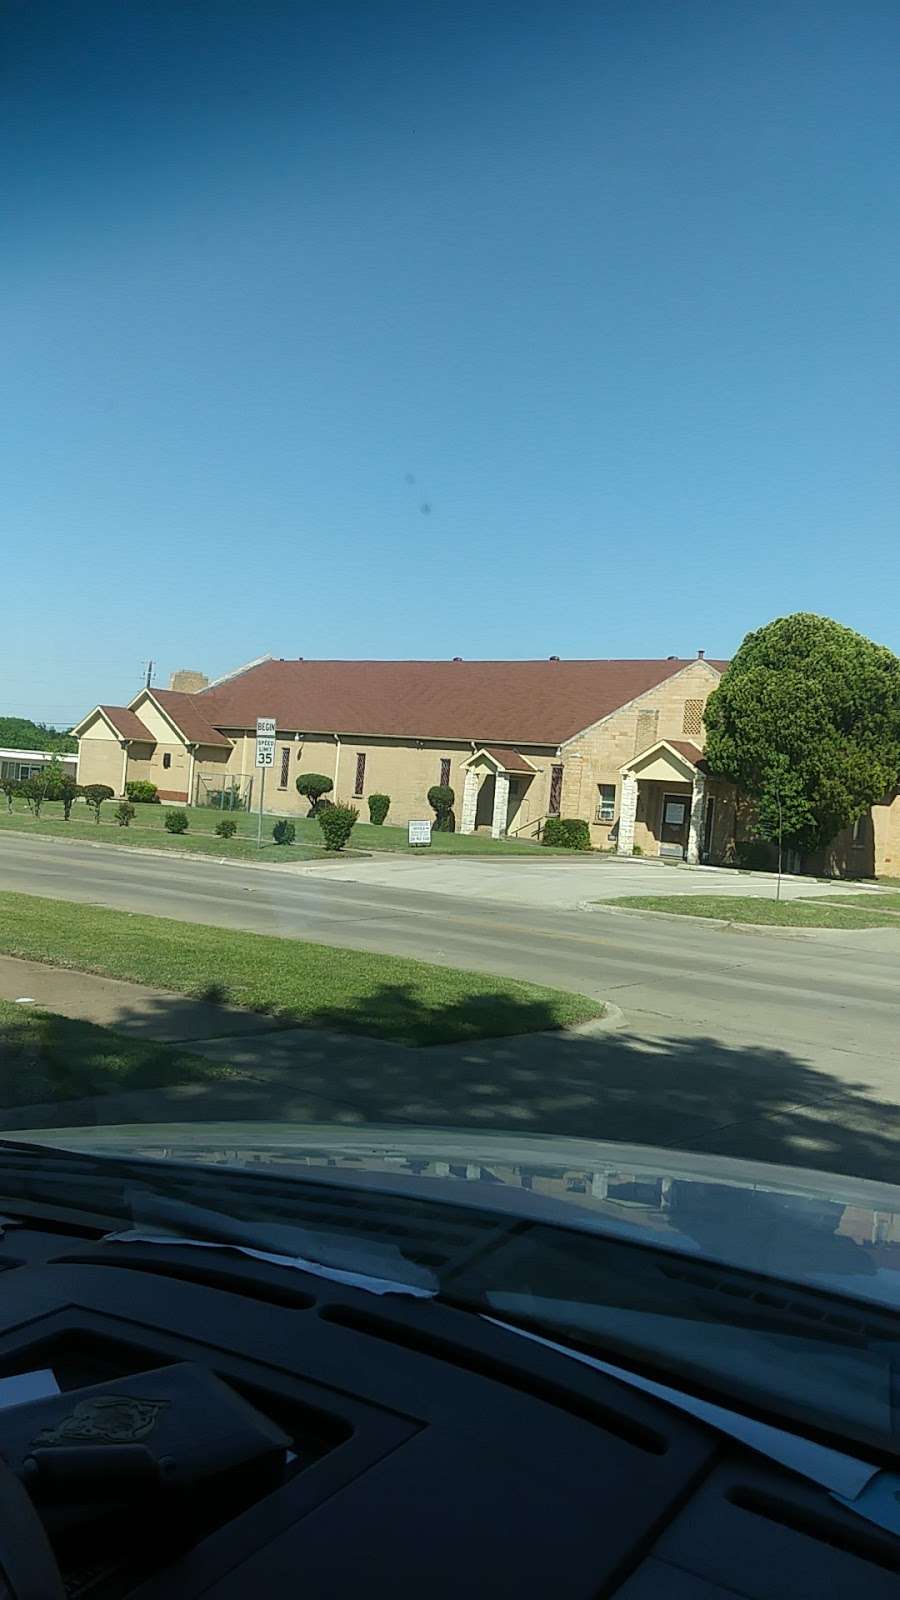 Cedar Crest Church of Christ | 2134 Cedar Crest Blvd, Dallas, TX 75203, USA | Phone: (469) 607-6367